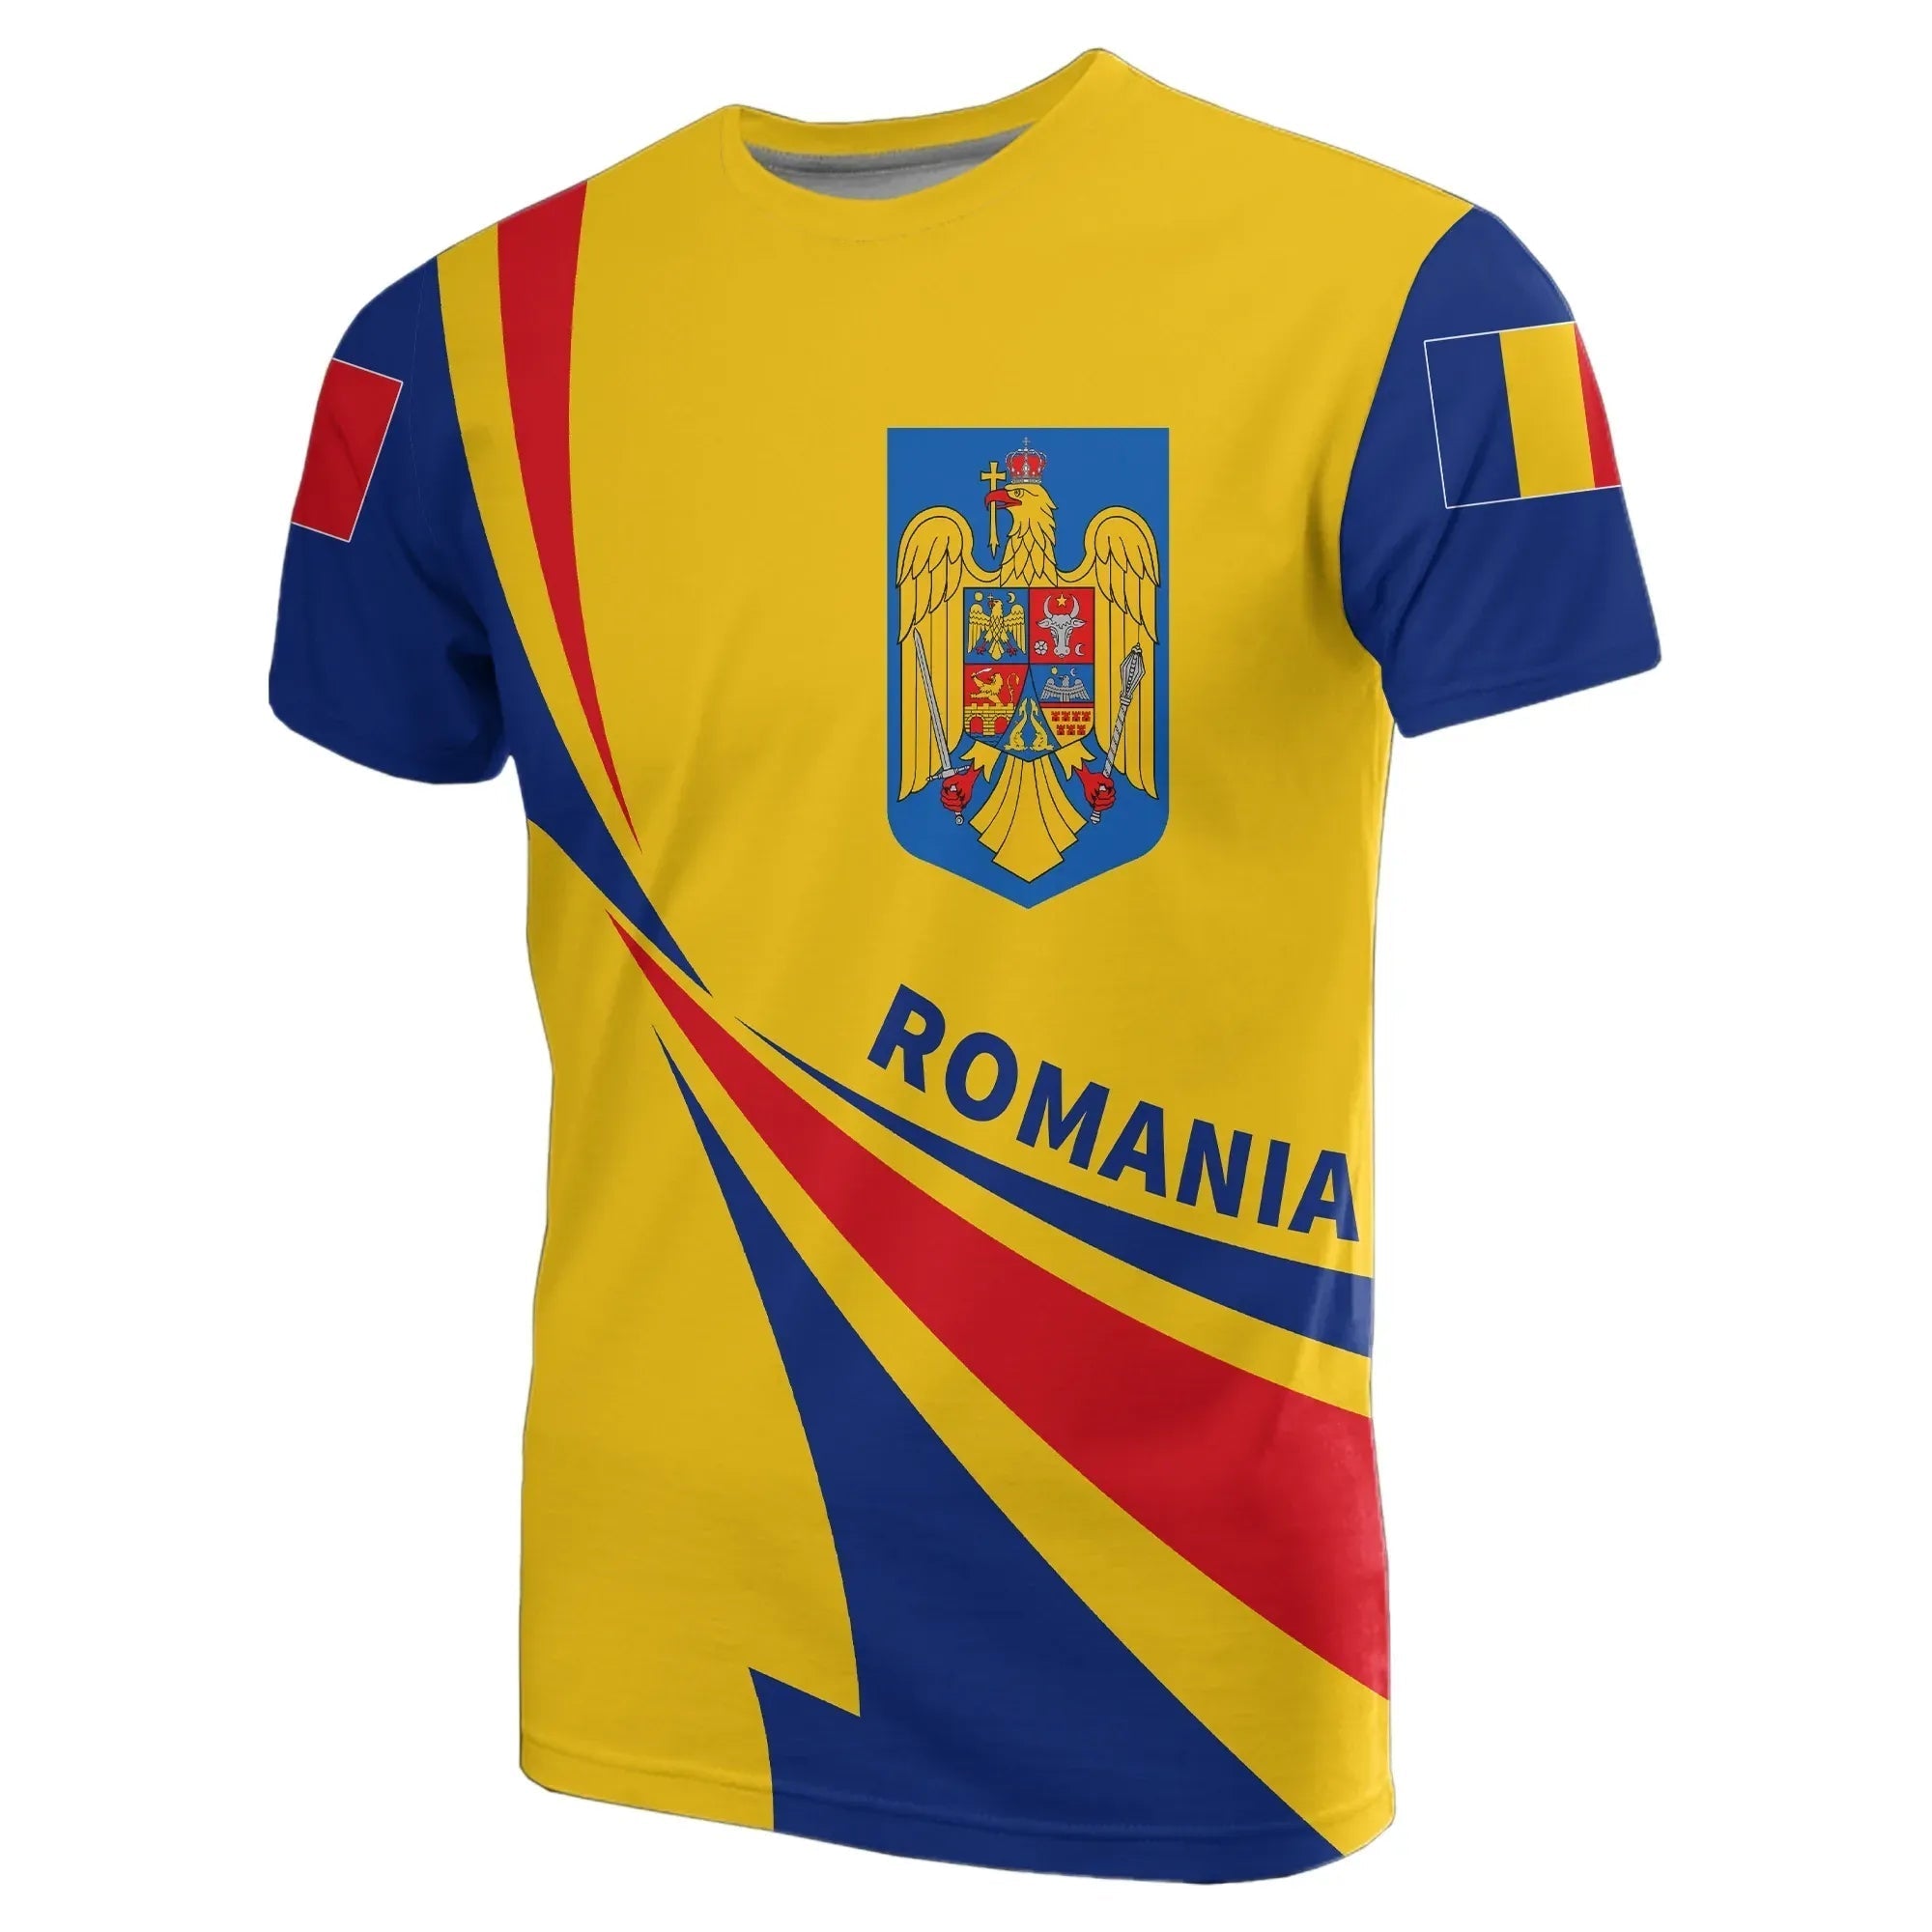 romania-flag-hoodie-dama-style